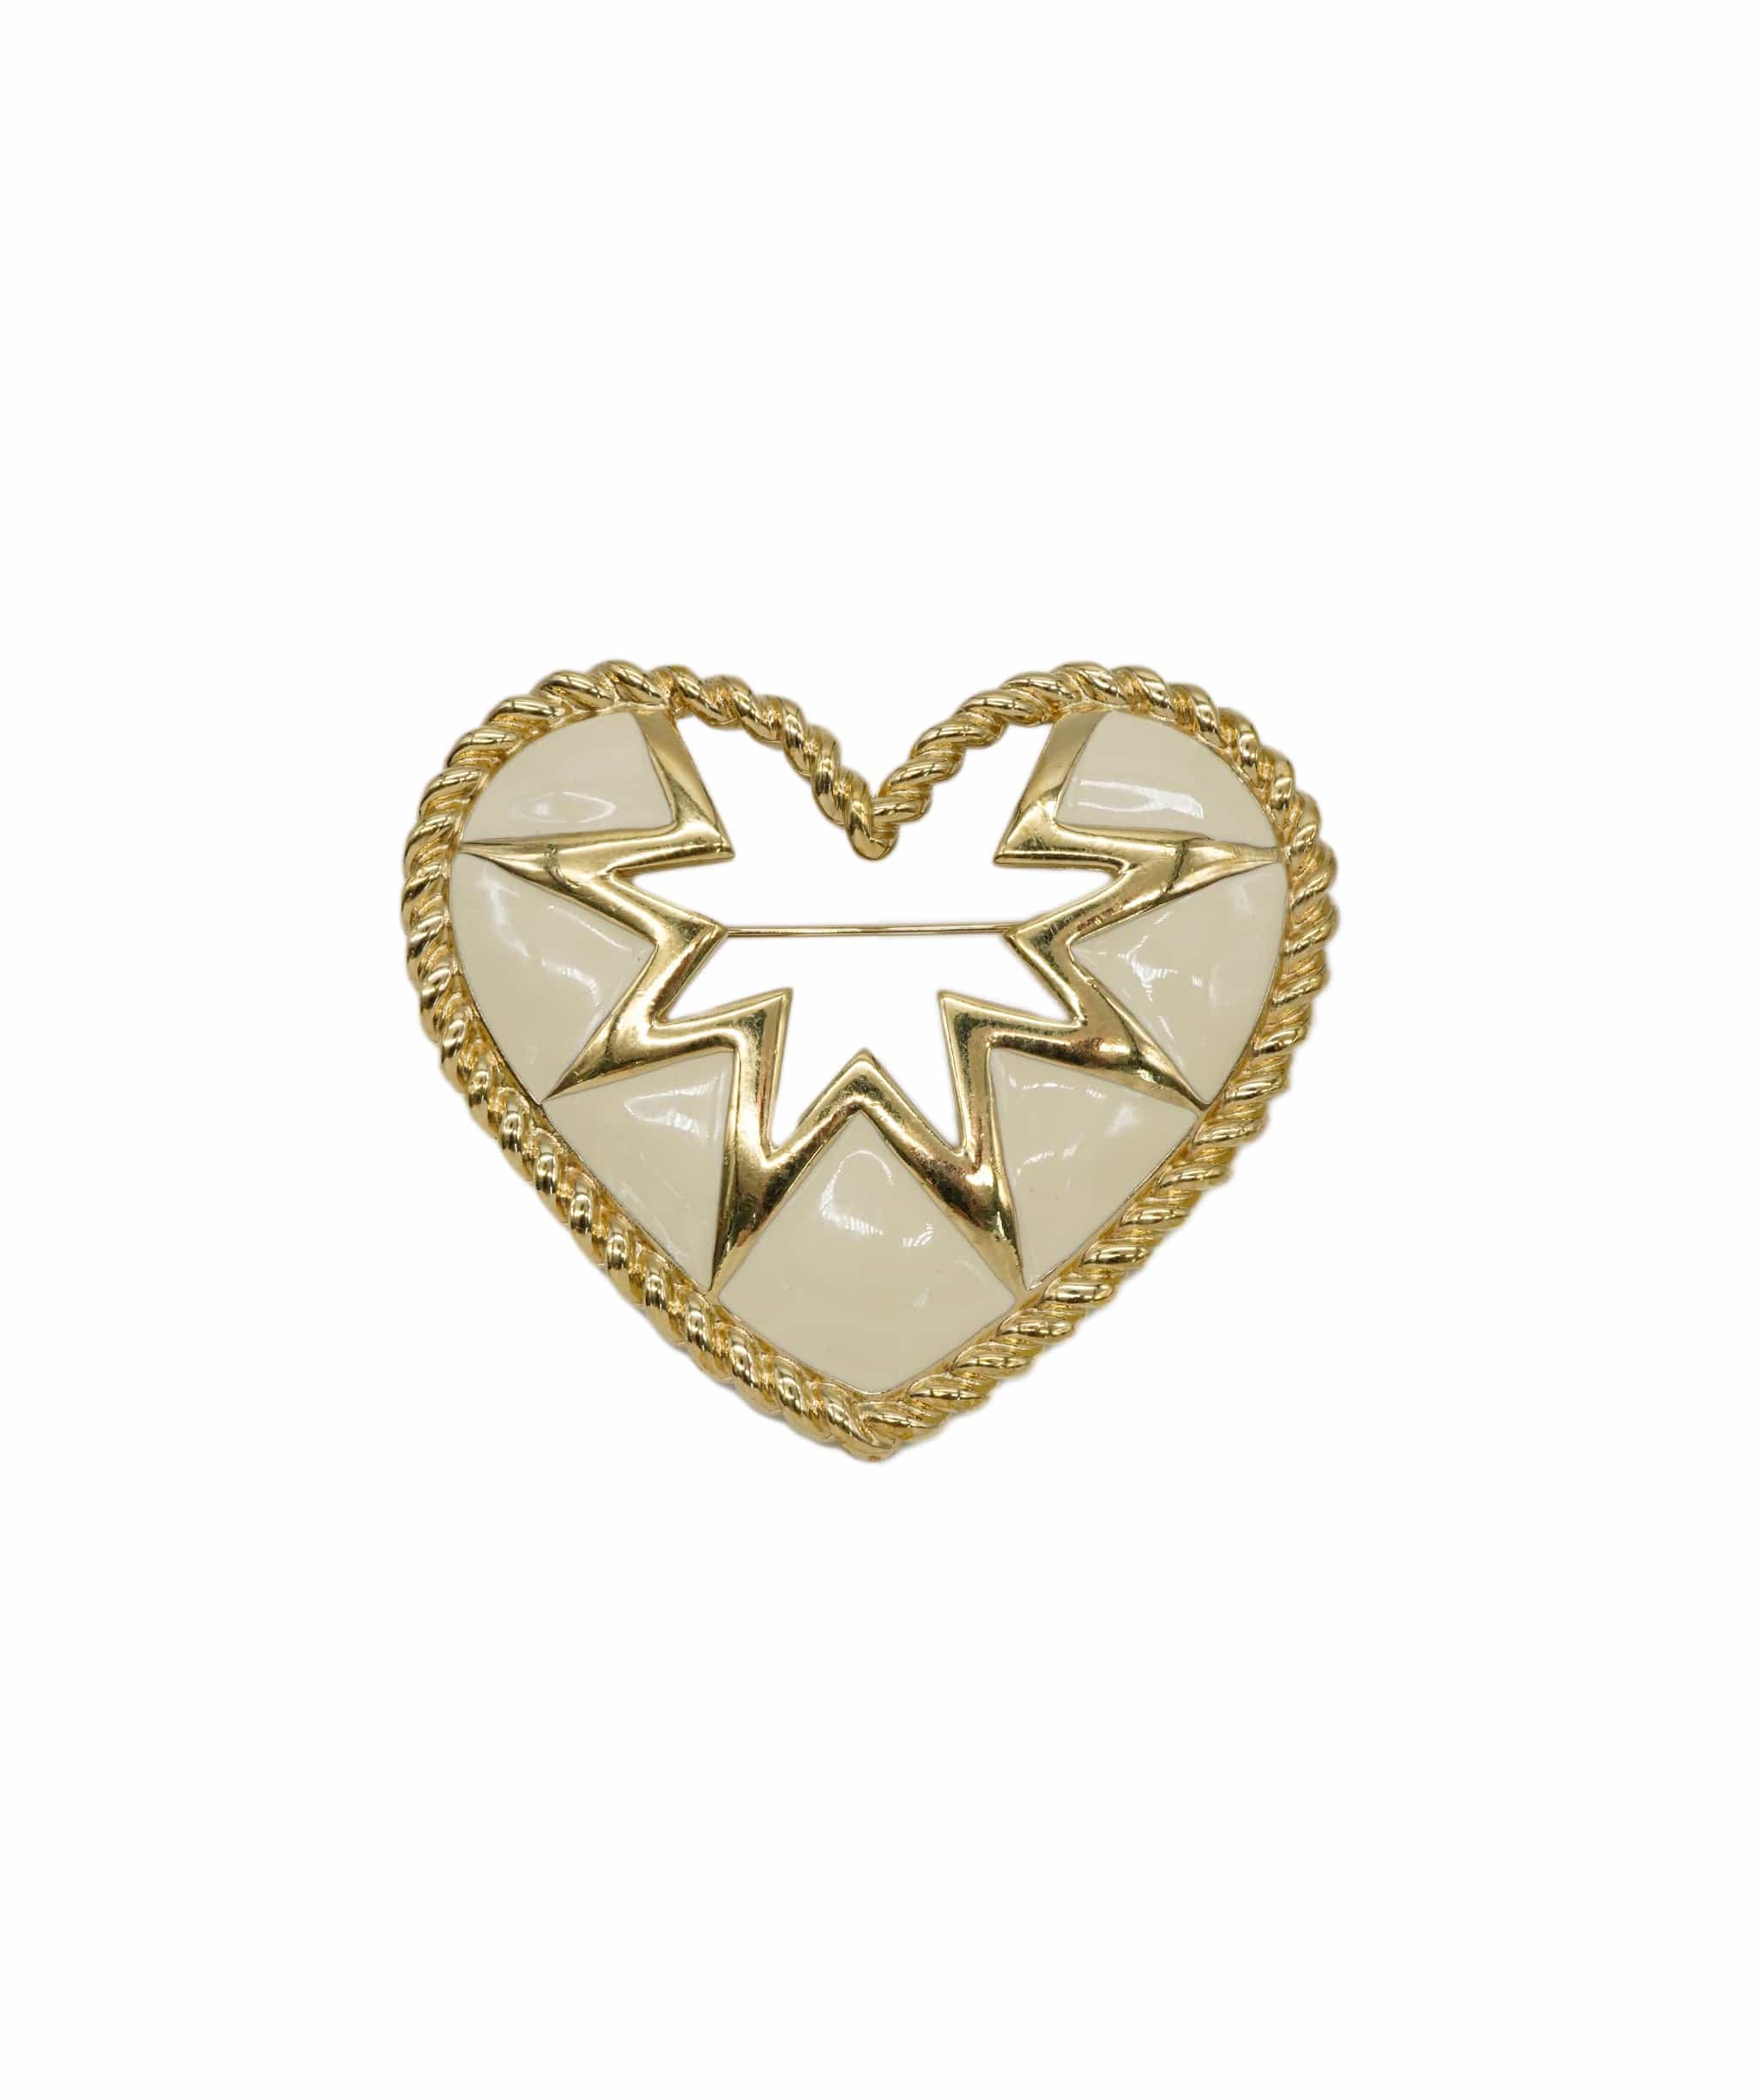 Givenchy Givenchy heart brooch AWL4460